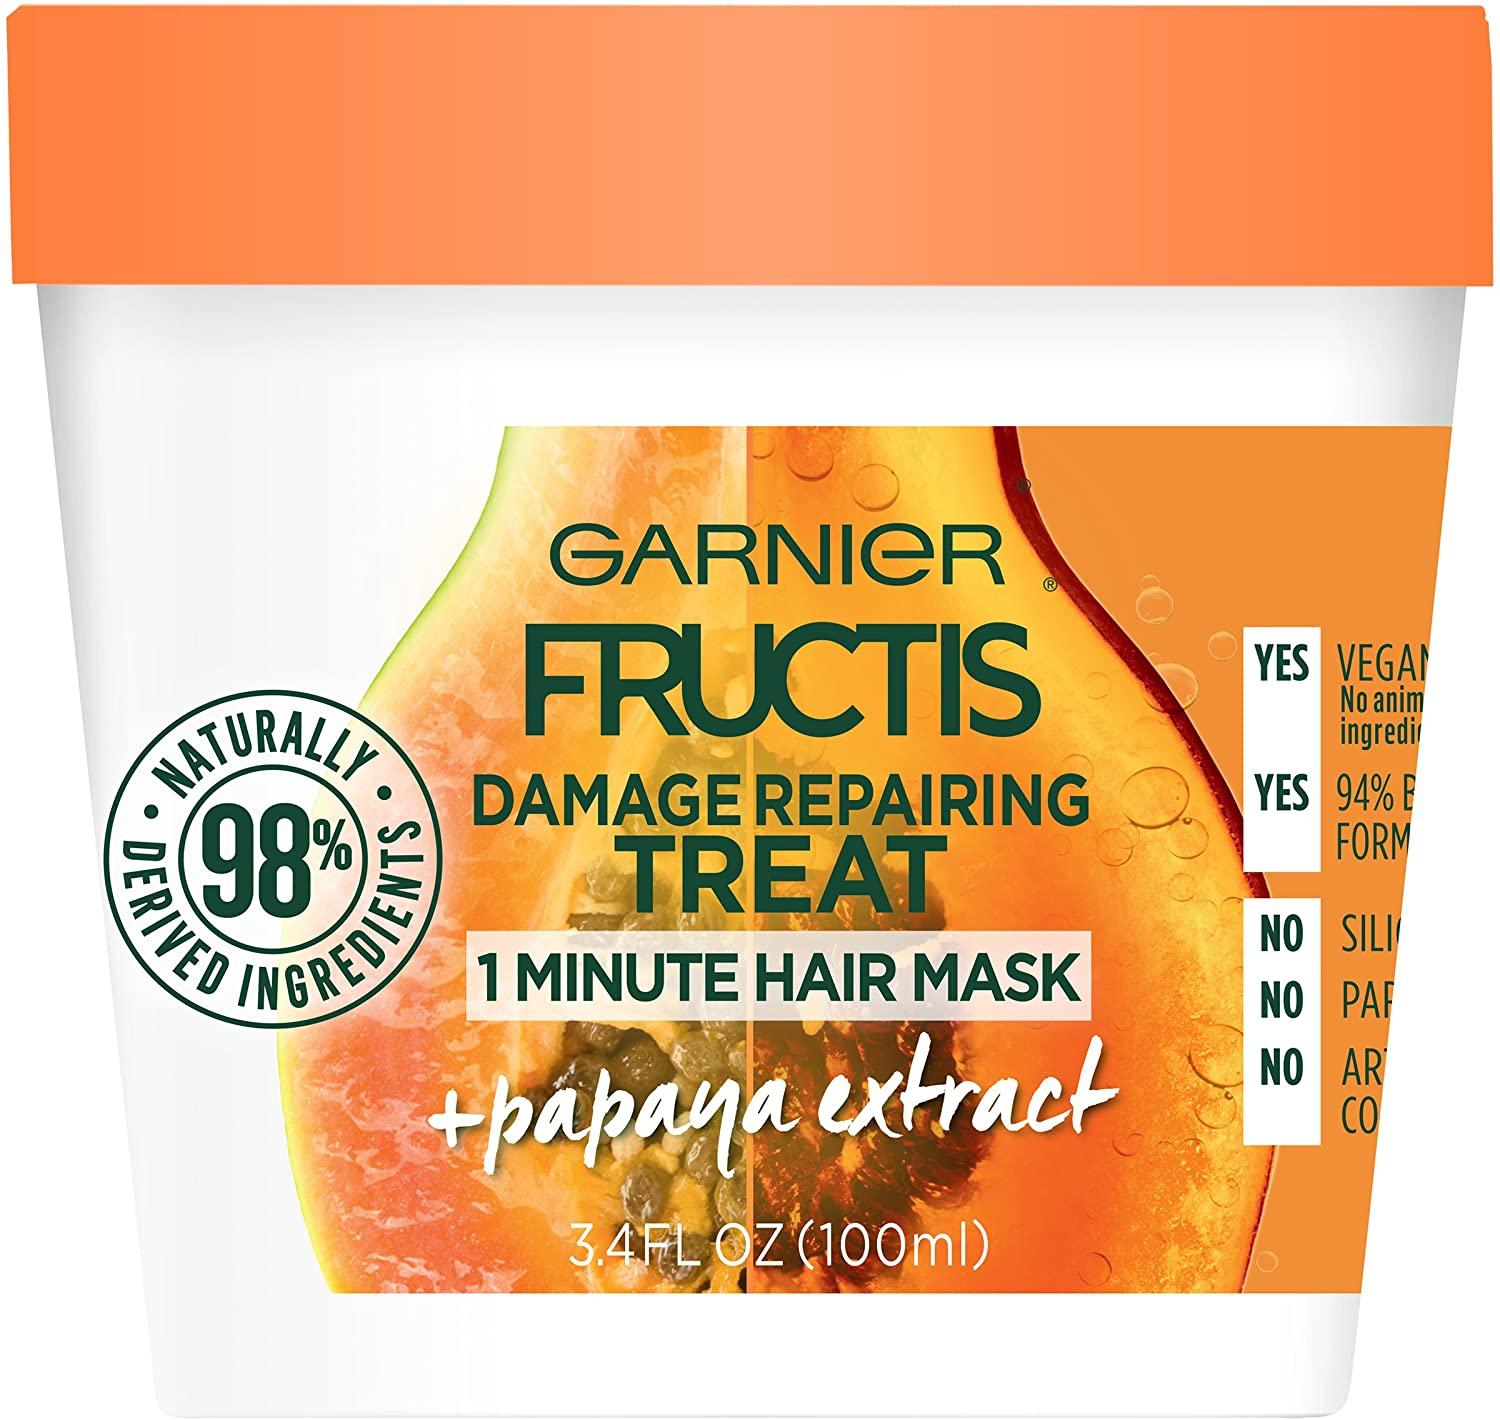 Garnier Fructis Damage Repairing 1-Minute Hair Mask for $2.32 Shipped